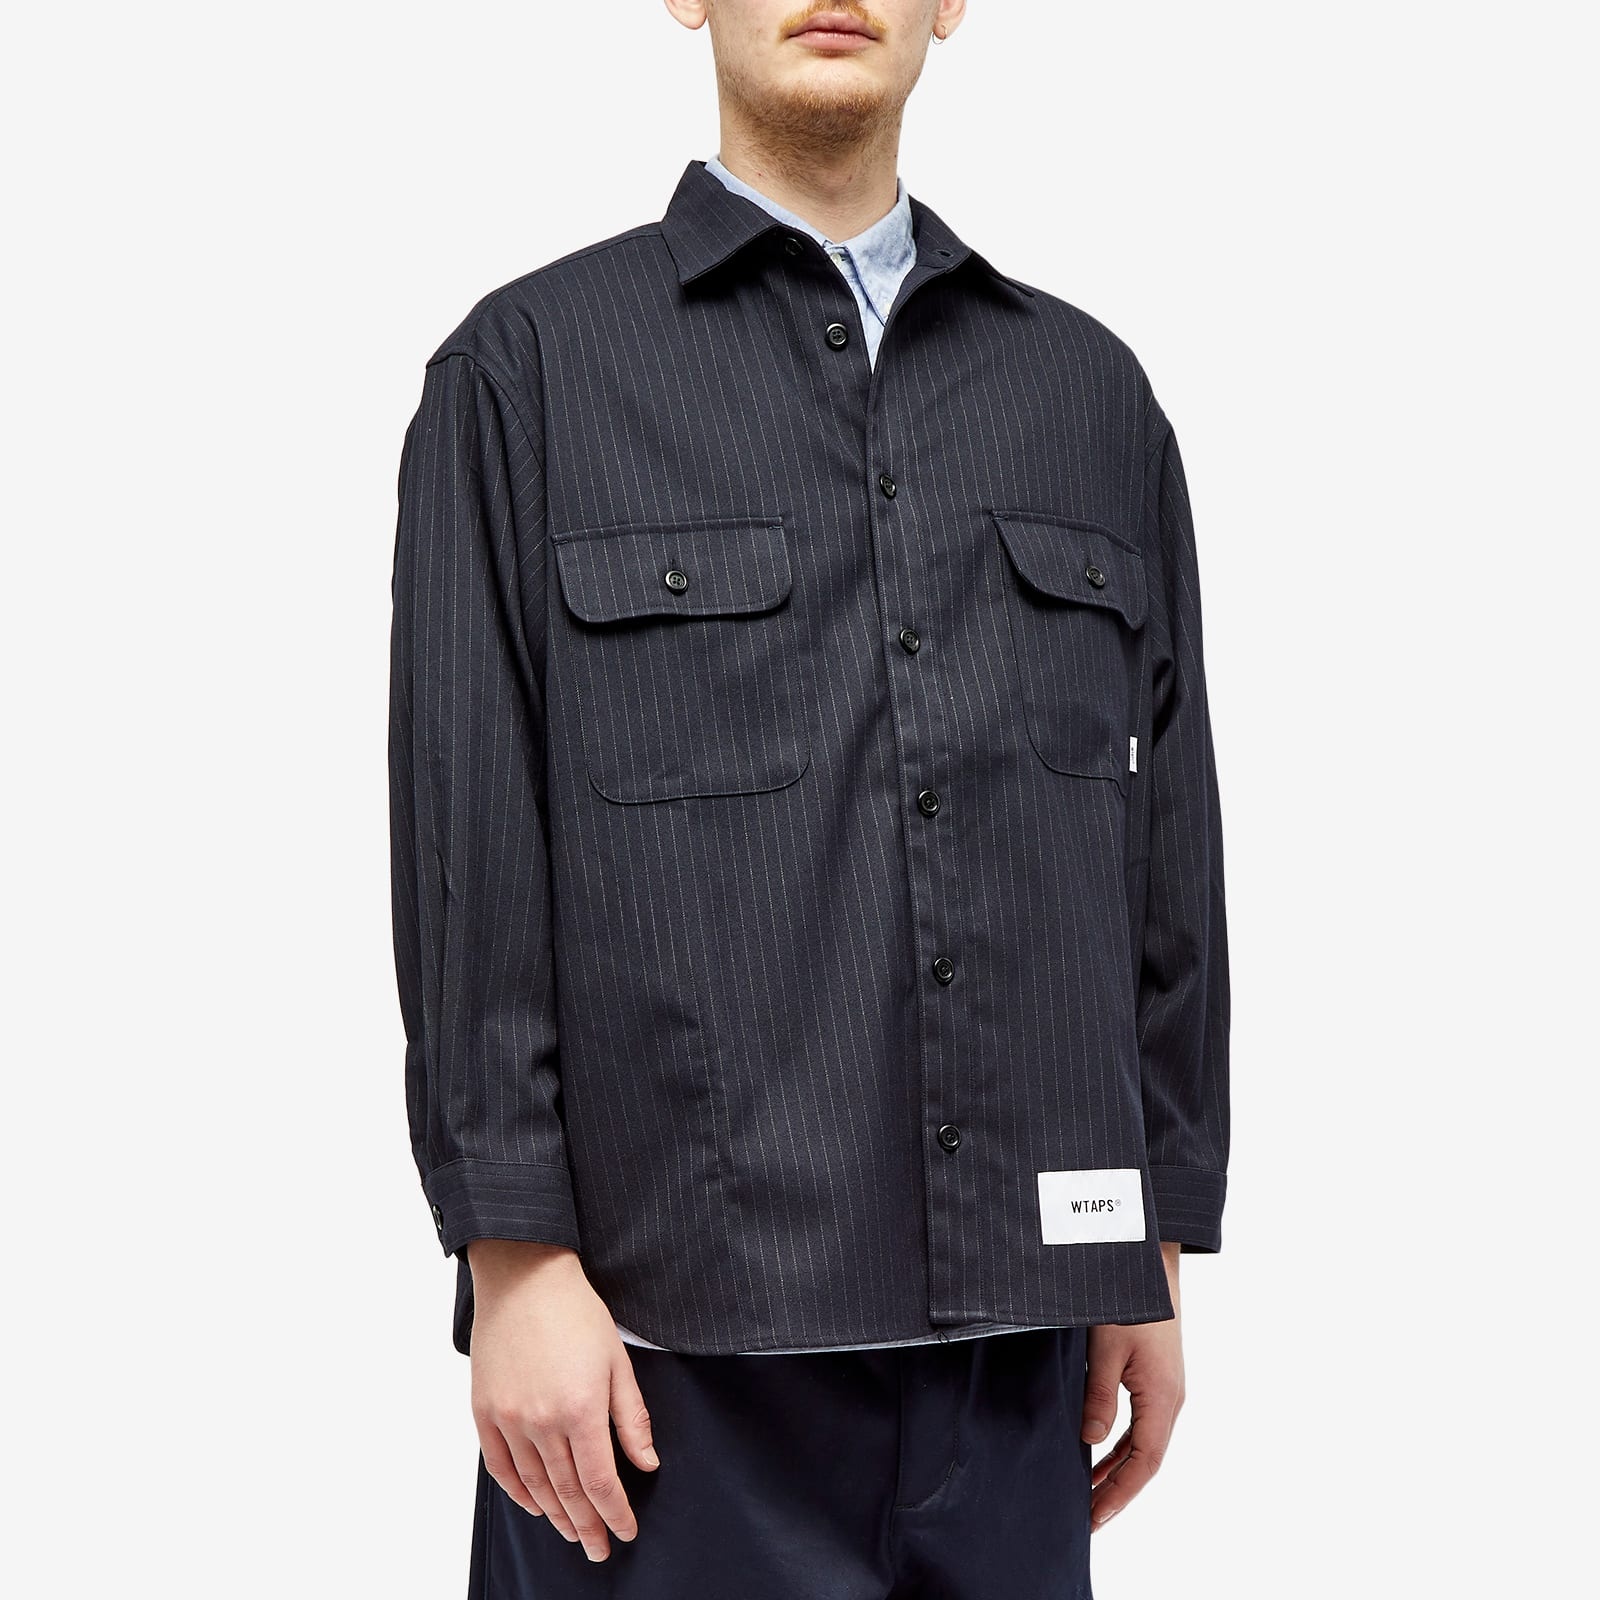 WTAPS 04 Pinstripe Shirt Jacket - 2